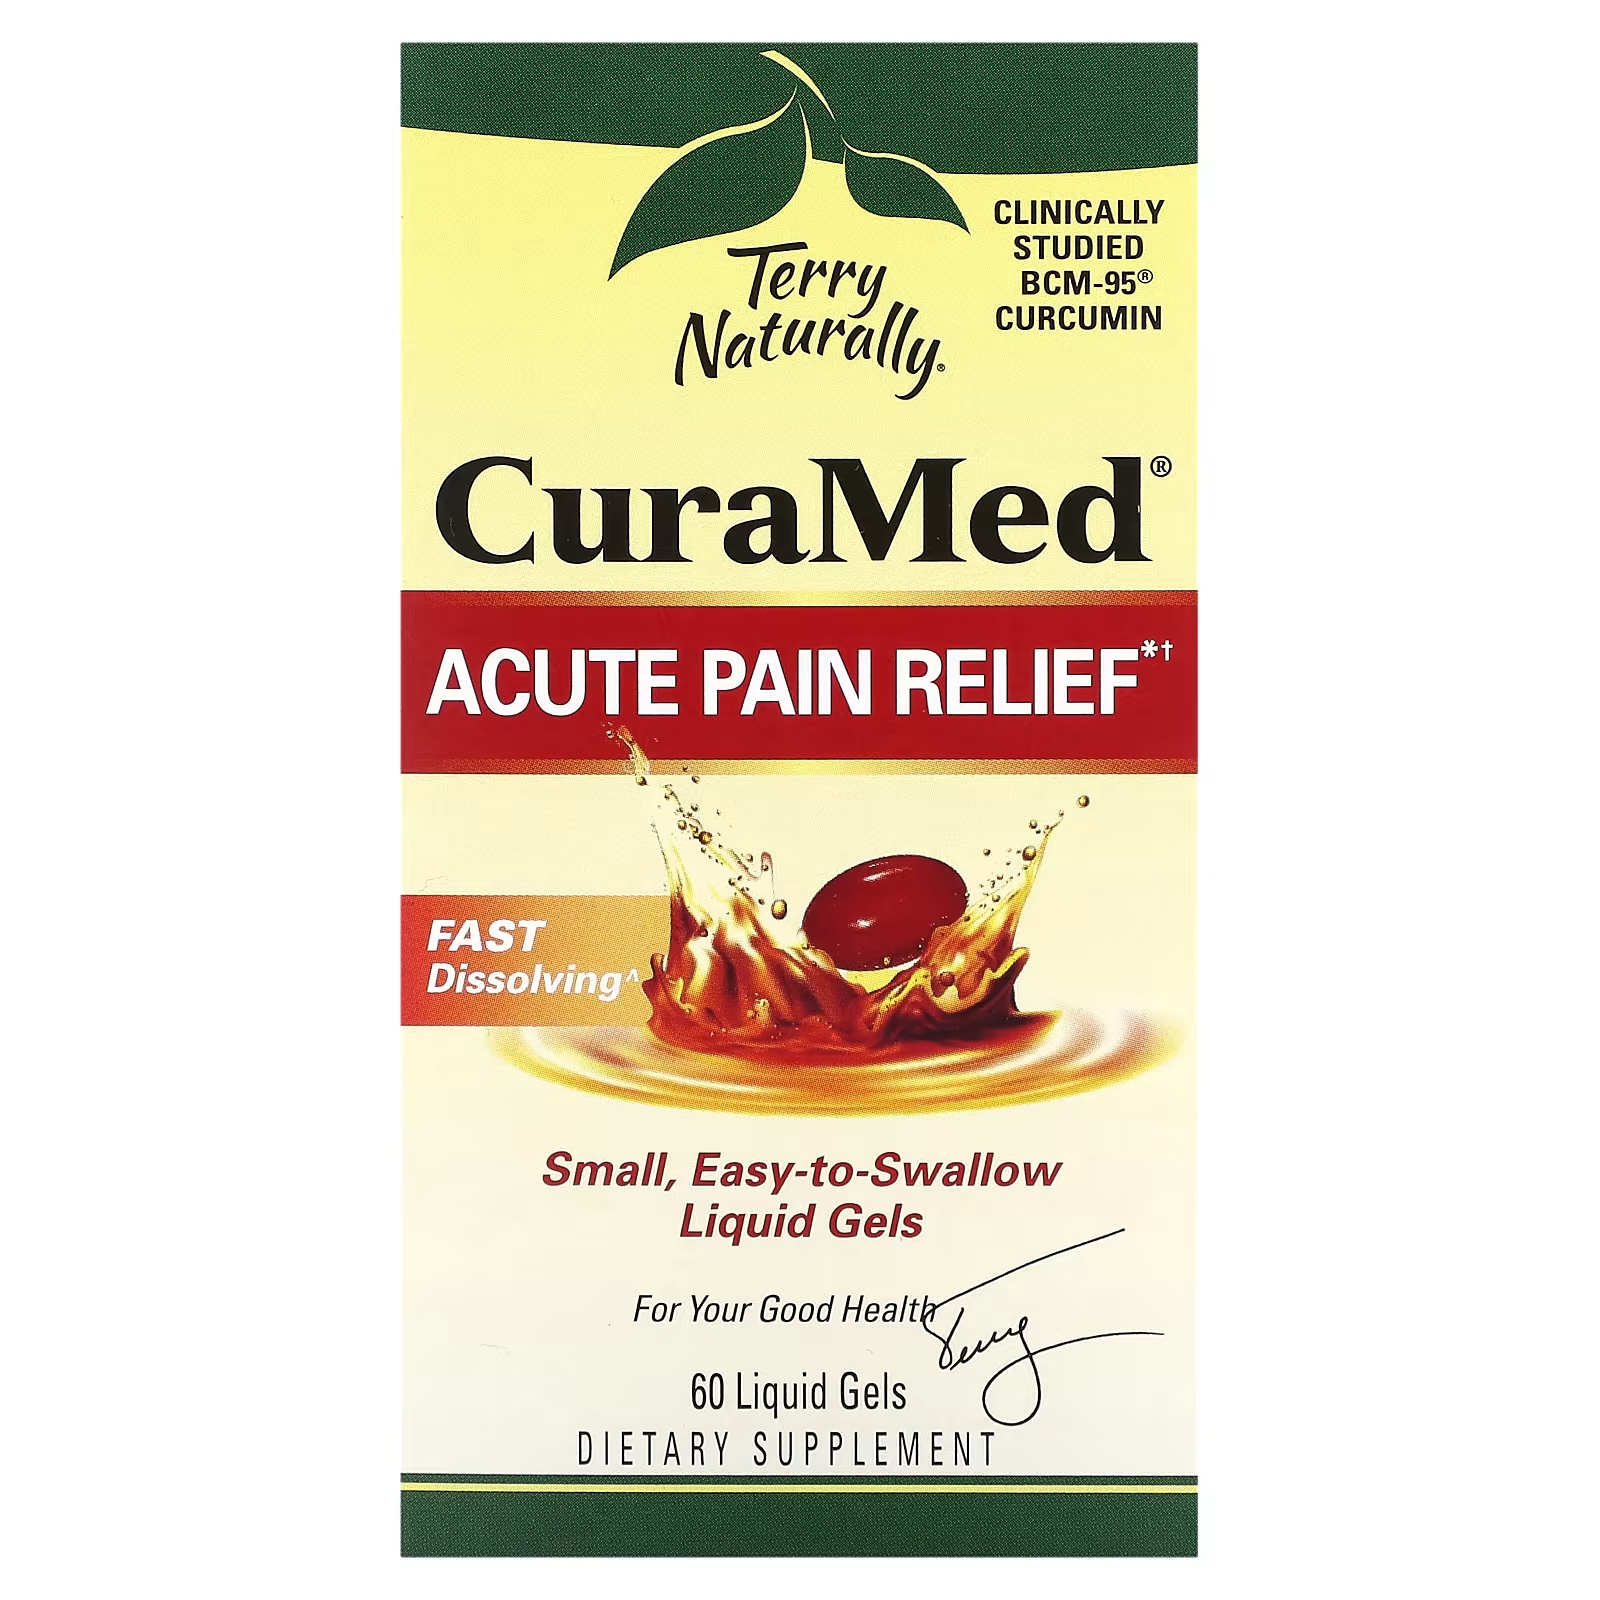 Обезболивающее средство Terry Naturally CuraMed от острой боли, 60 жидких гелей hot 80pcs tiger balm pain relief patch fast relief aches pains